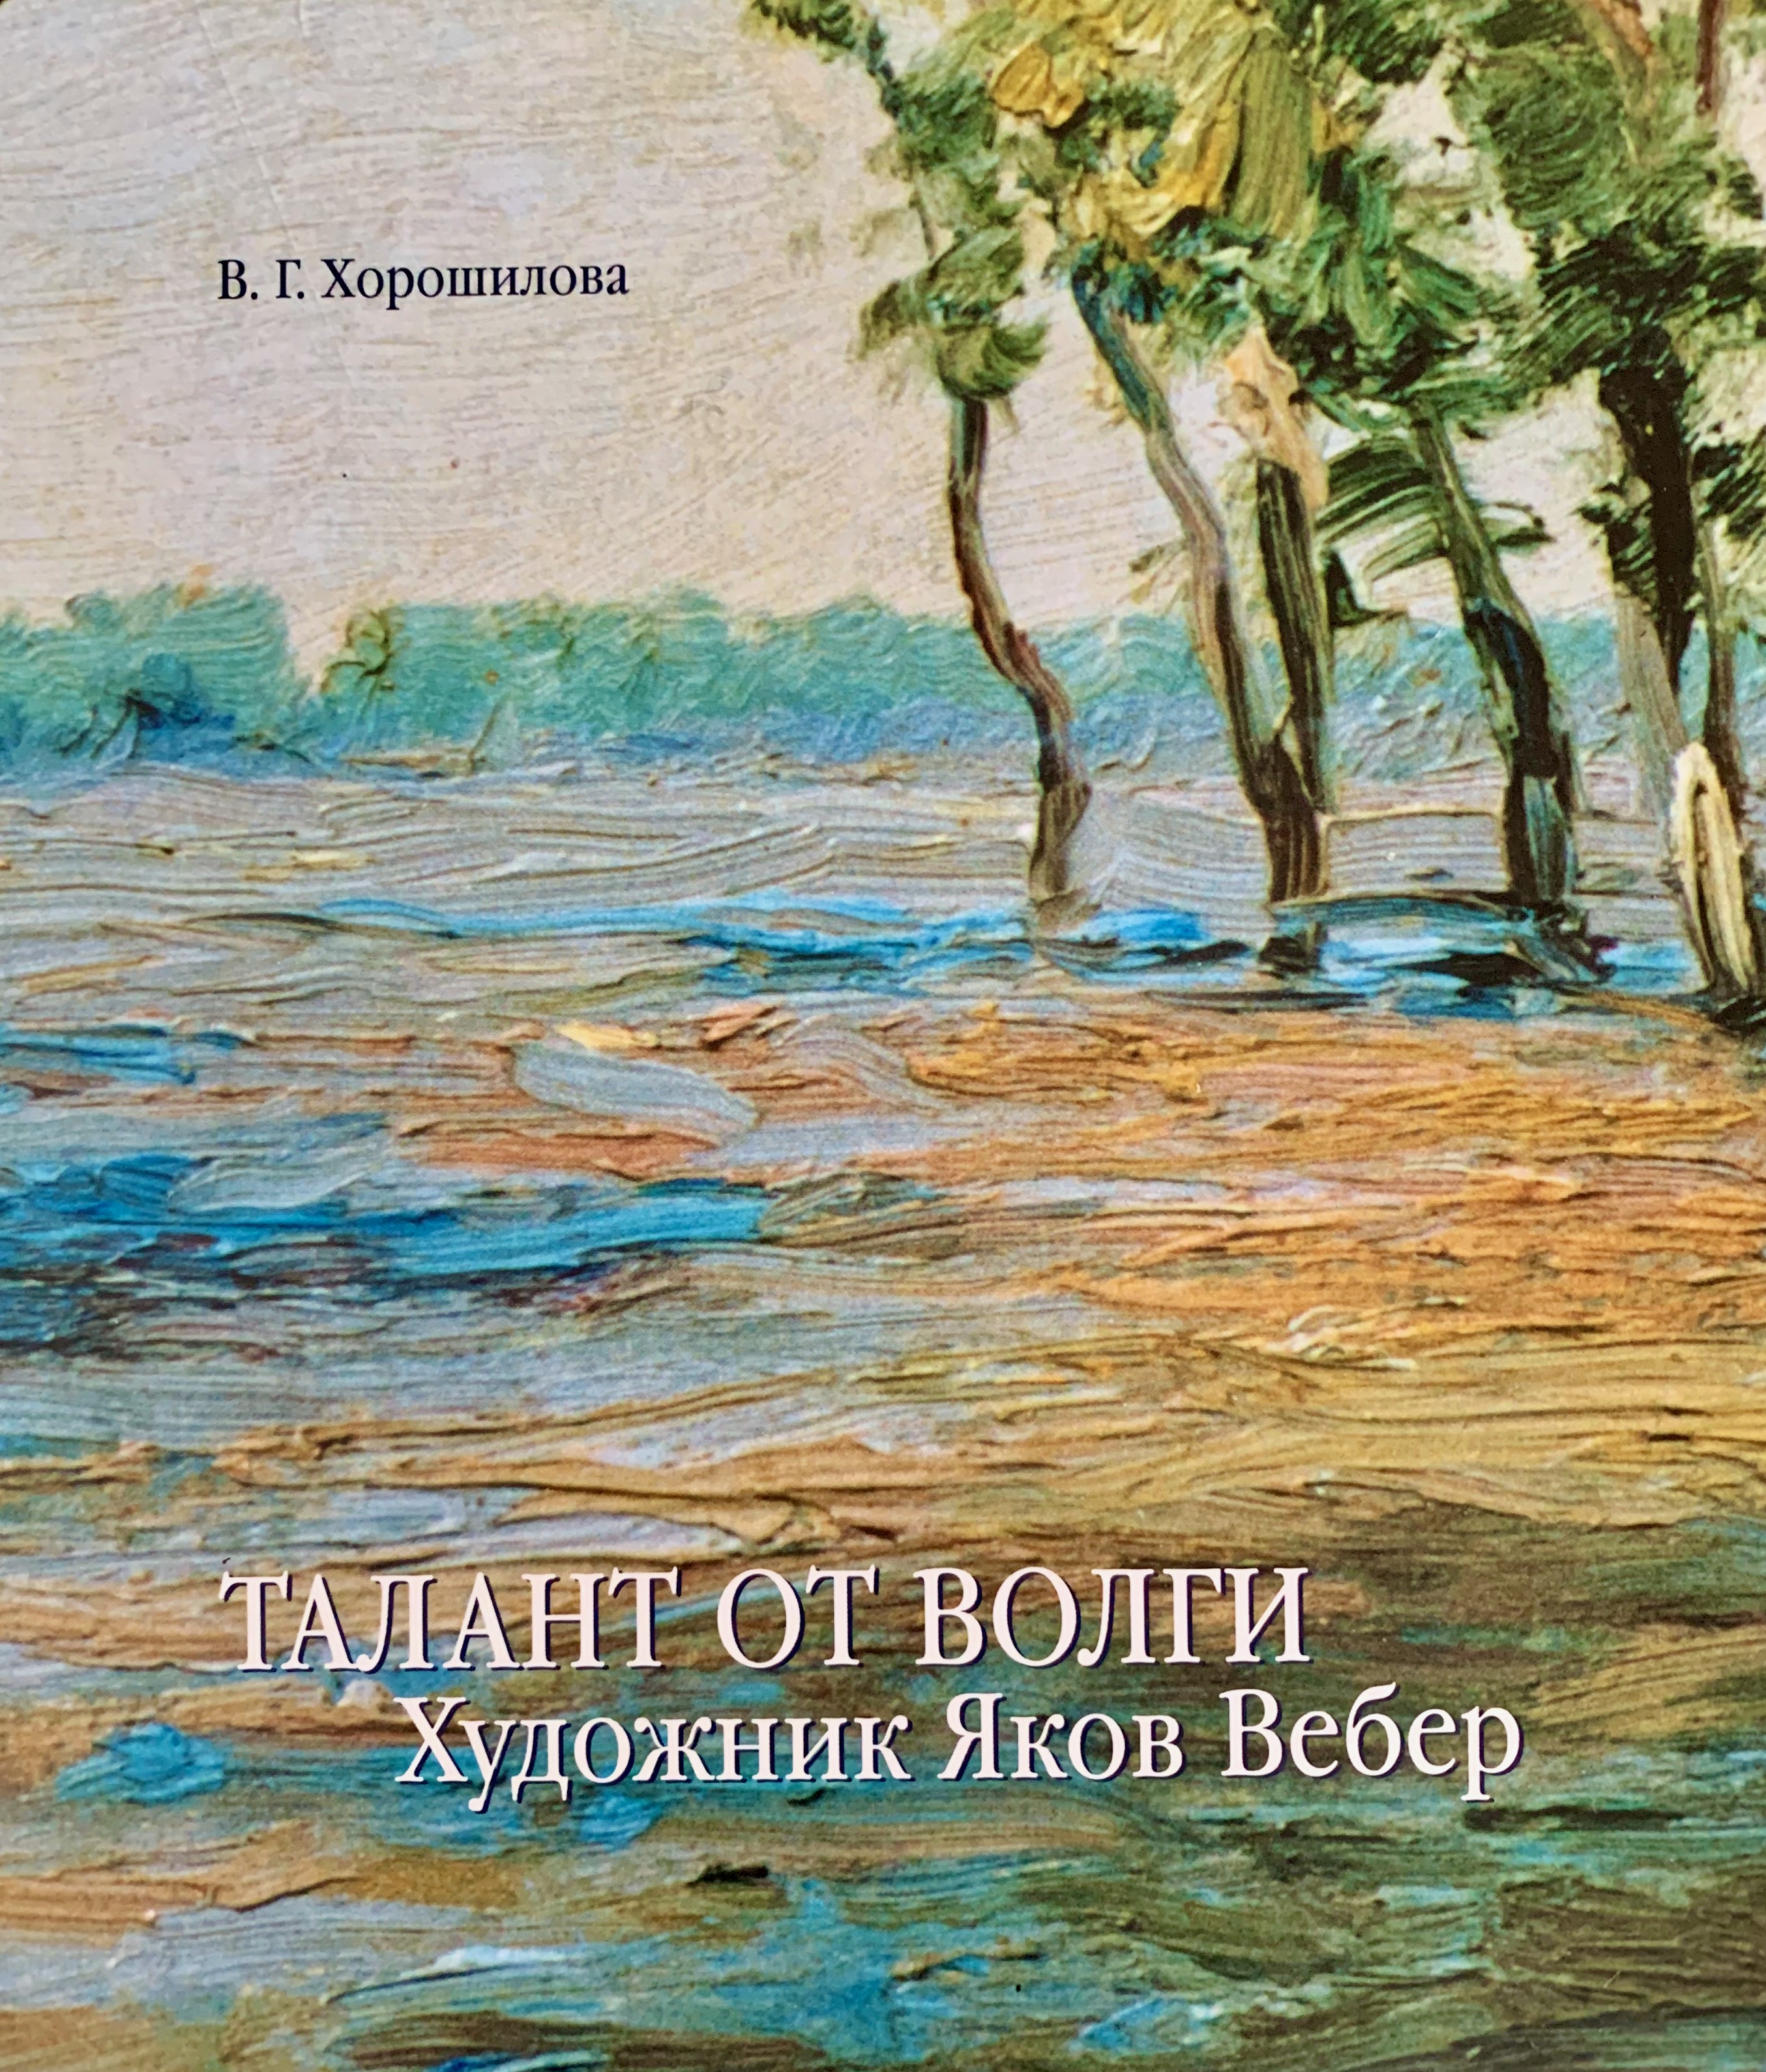 Cover of "Talent on the Volga" by Vera Choroschilowa